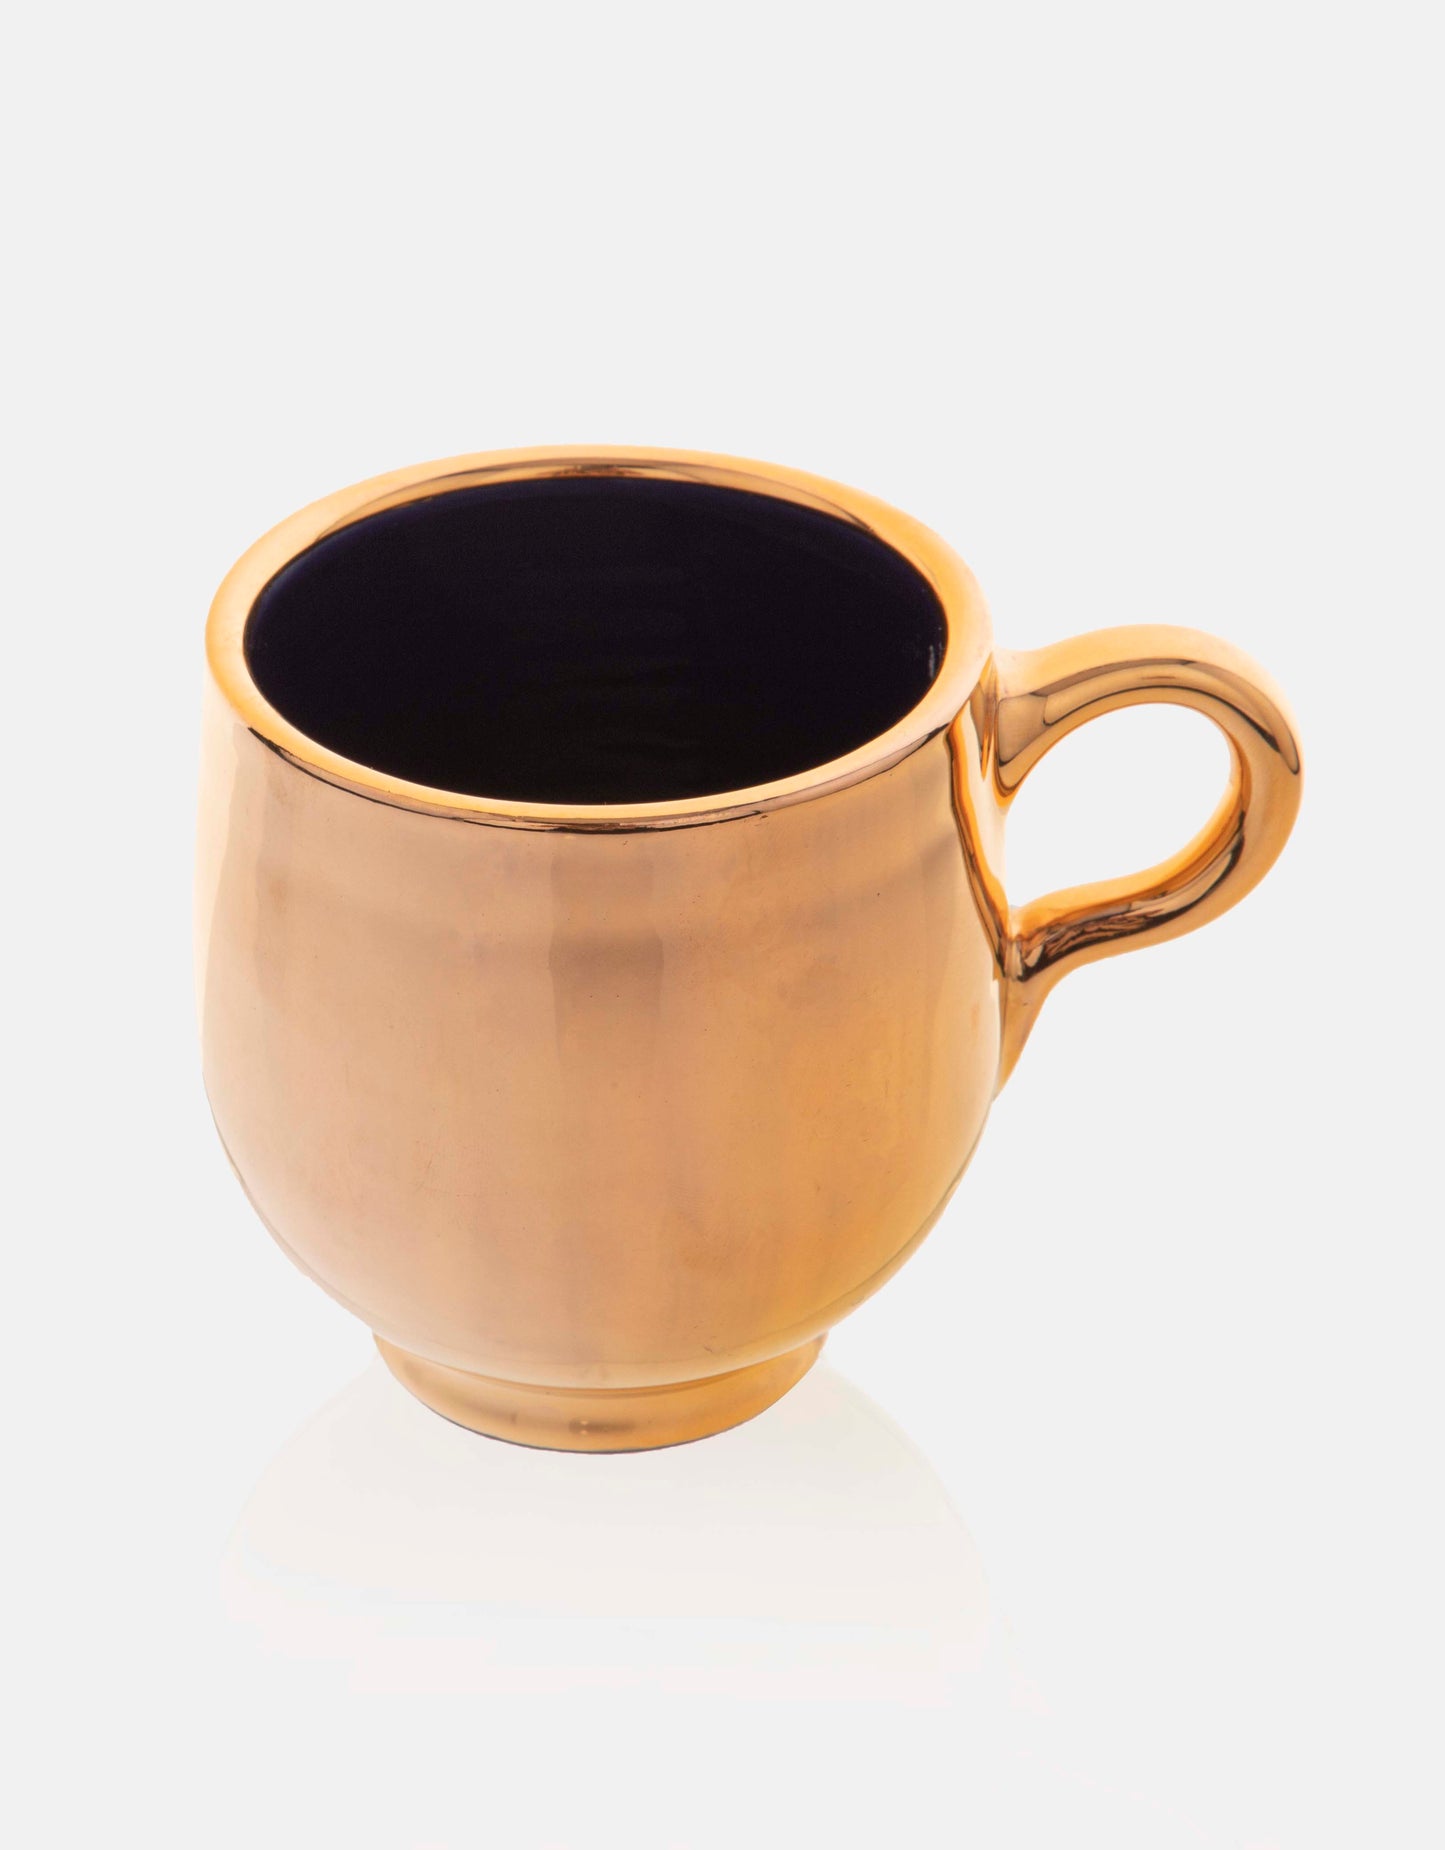 luxurious mug with real GOLD glaze handle